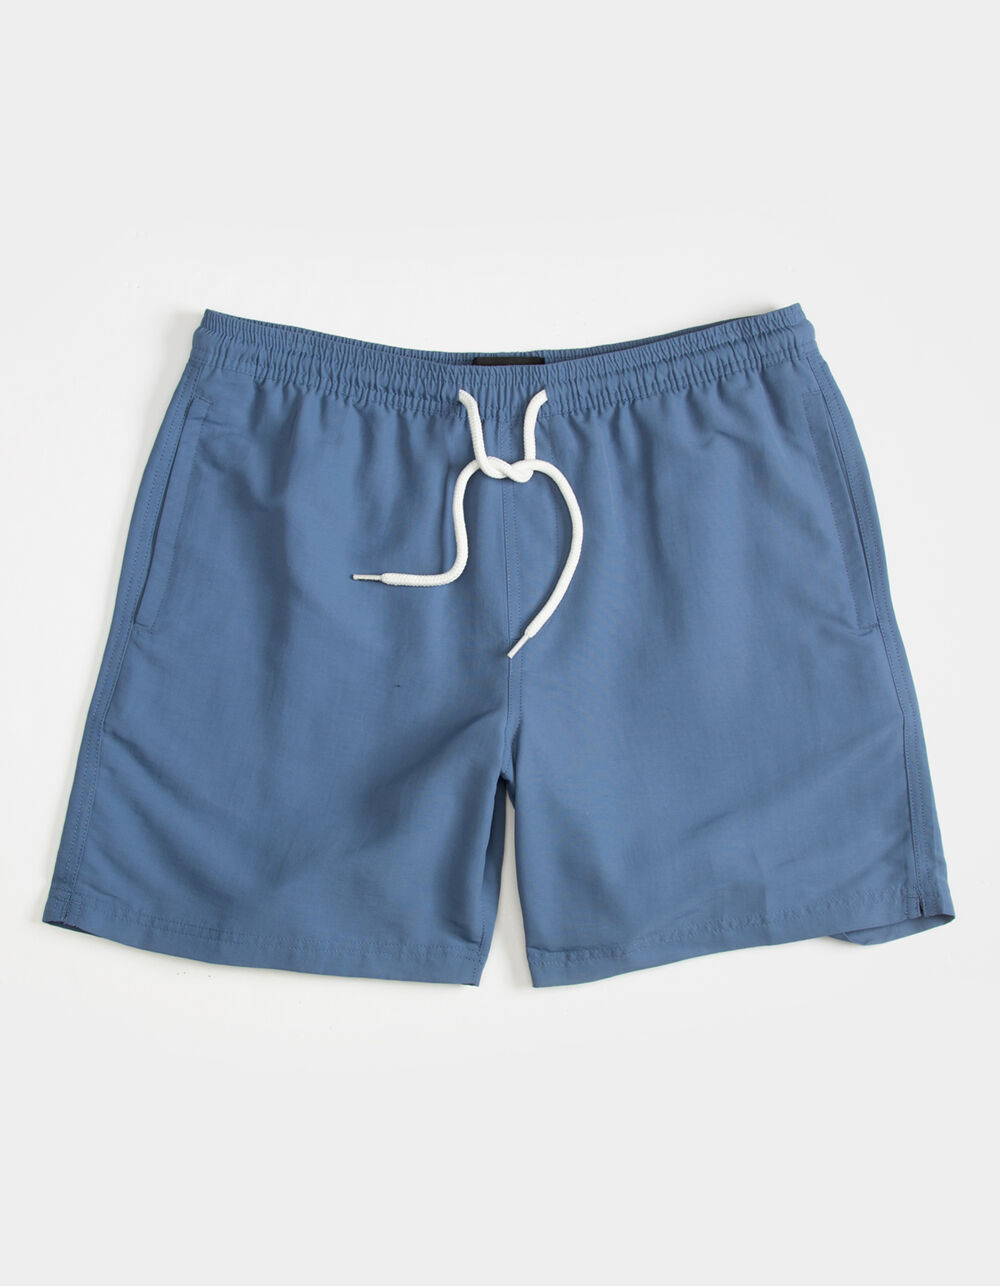 Rsq 6 Nylon Shorts - Blue - Small